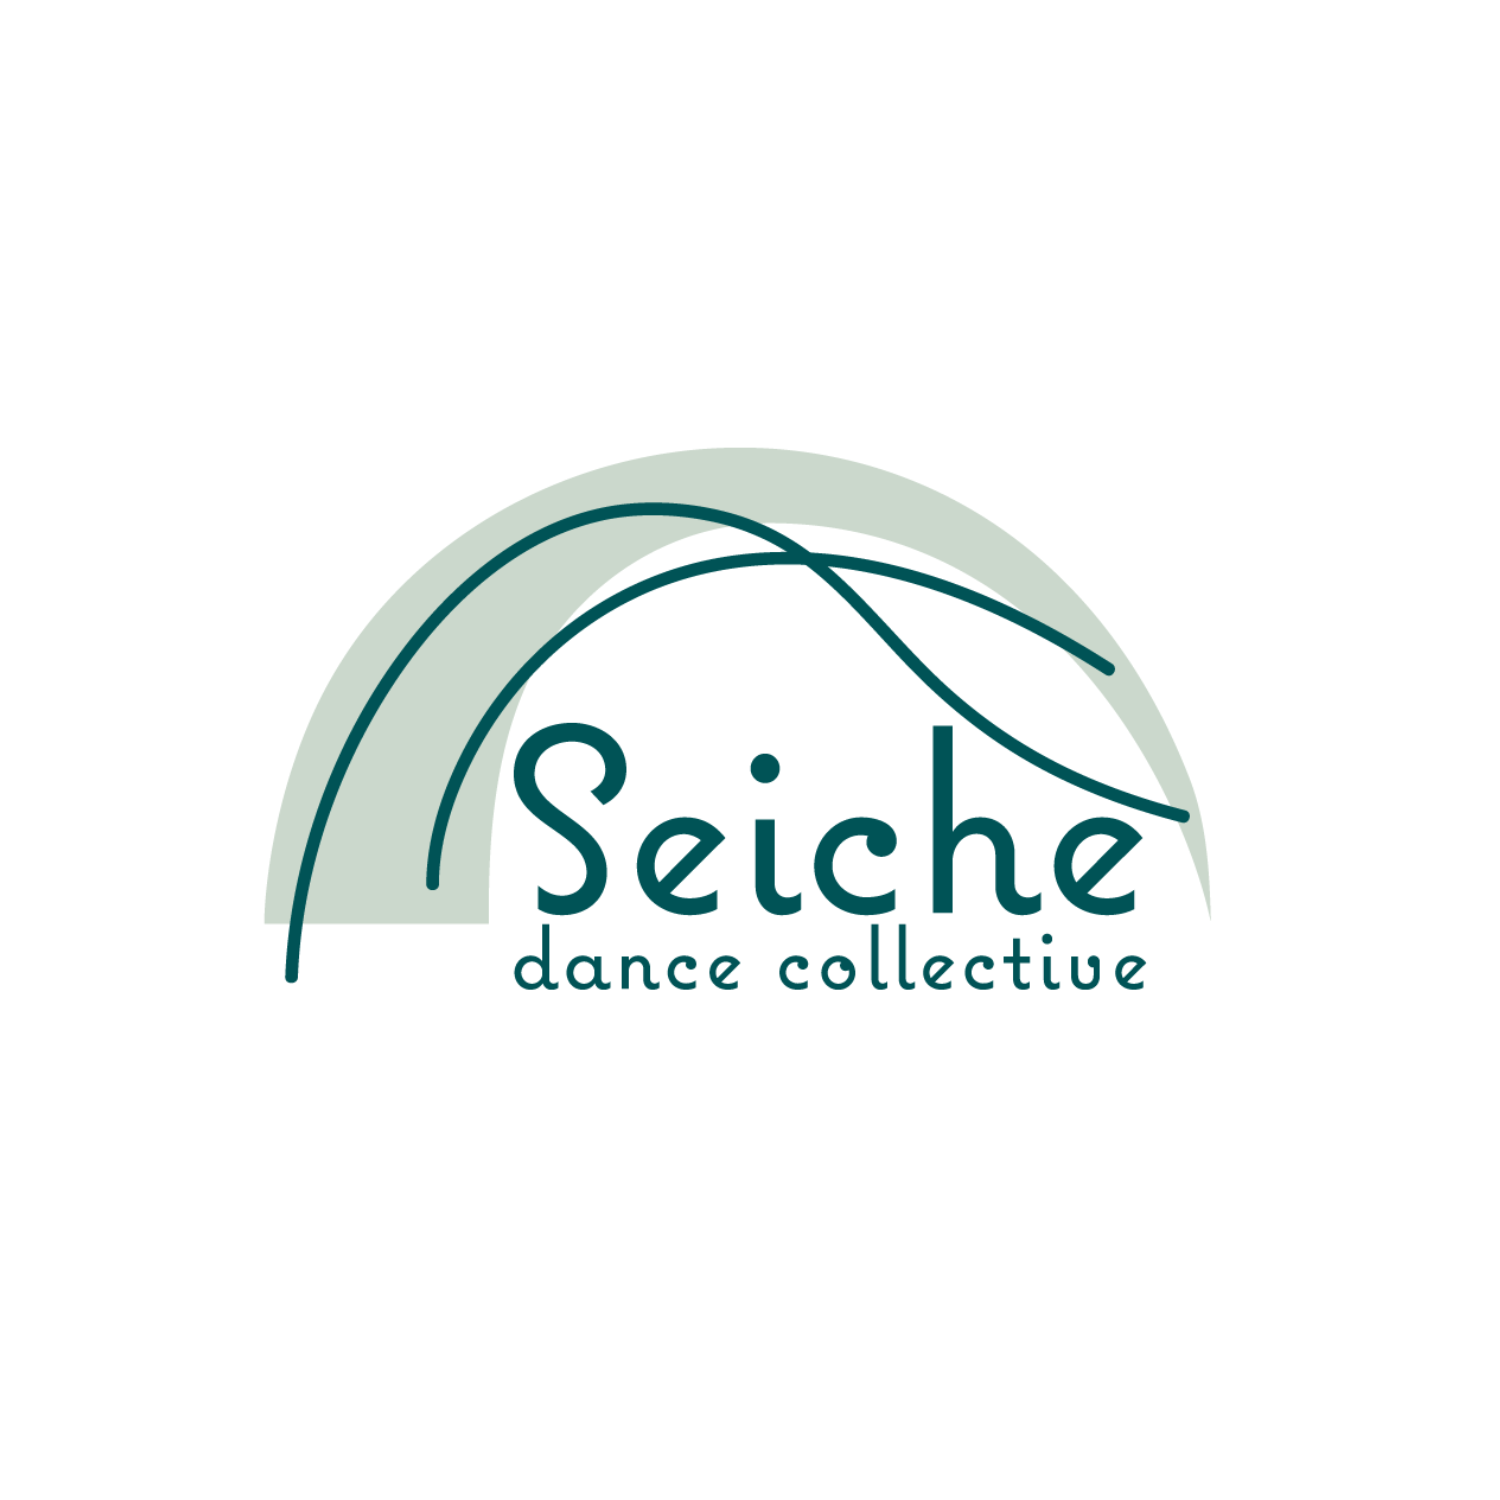 Community Class: Ballet - Seiche Dance Collective